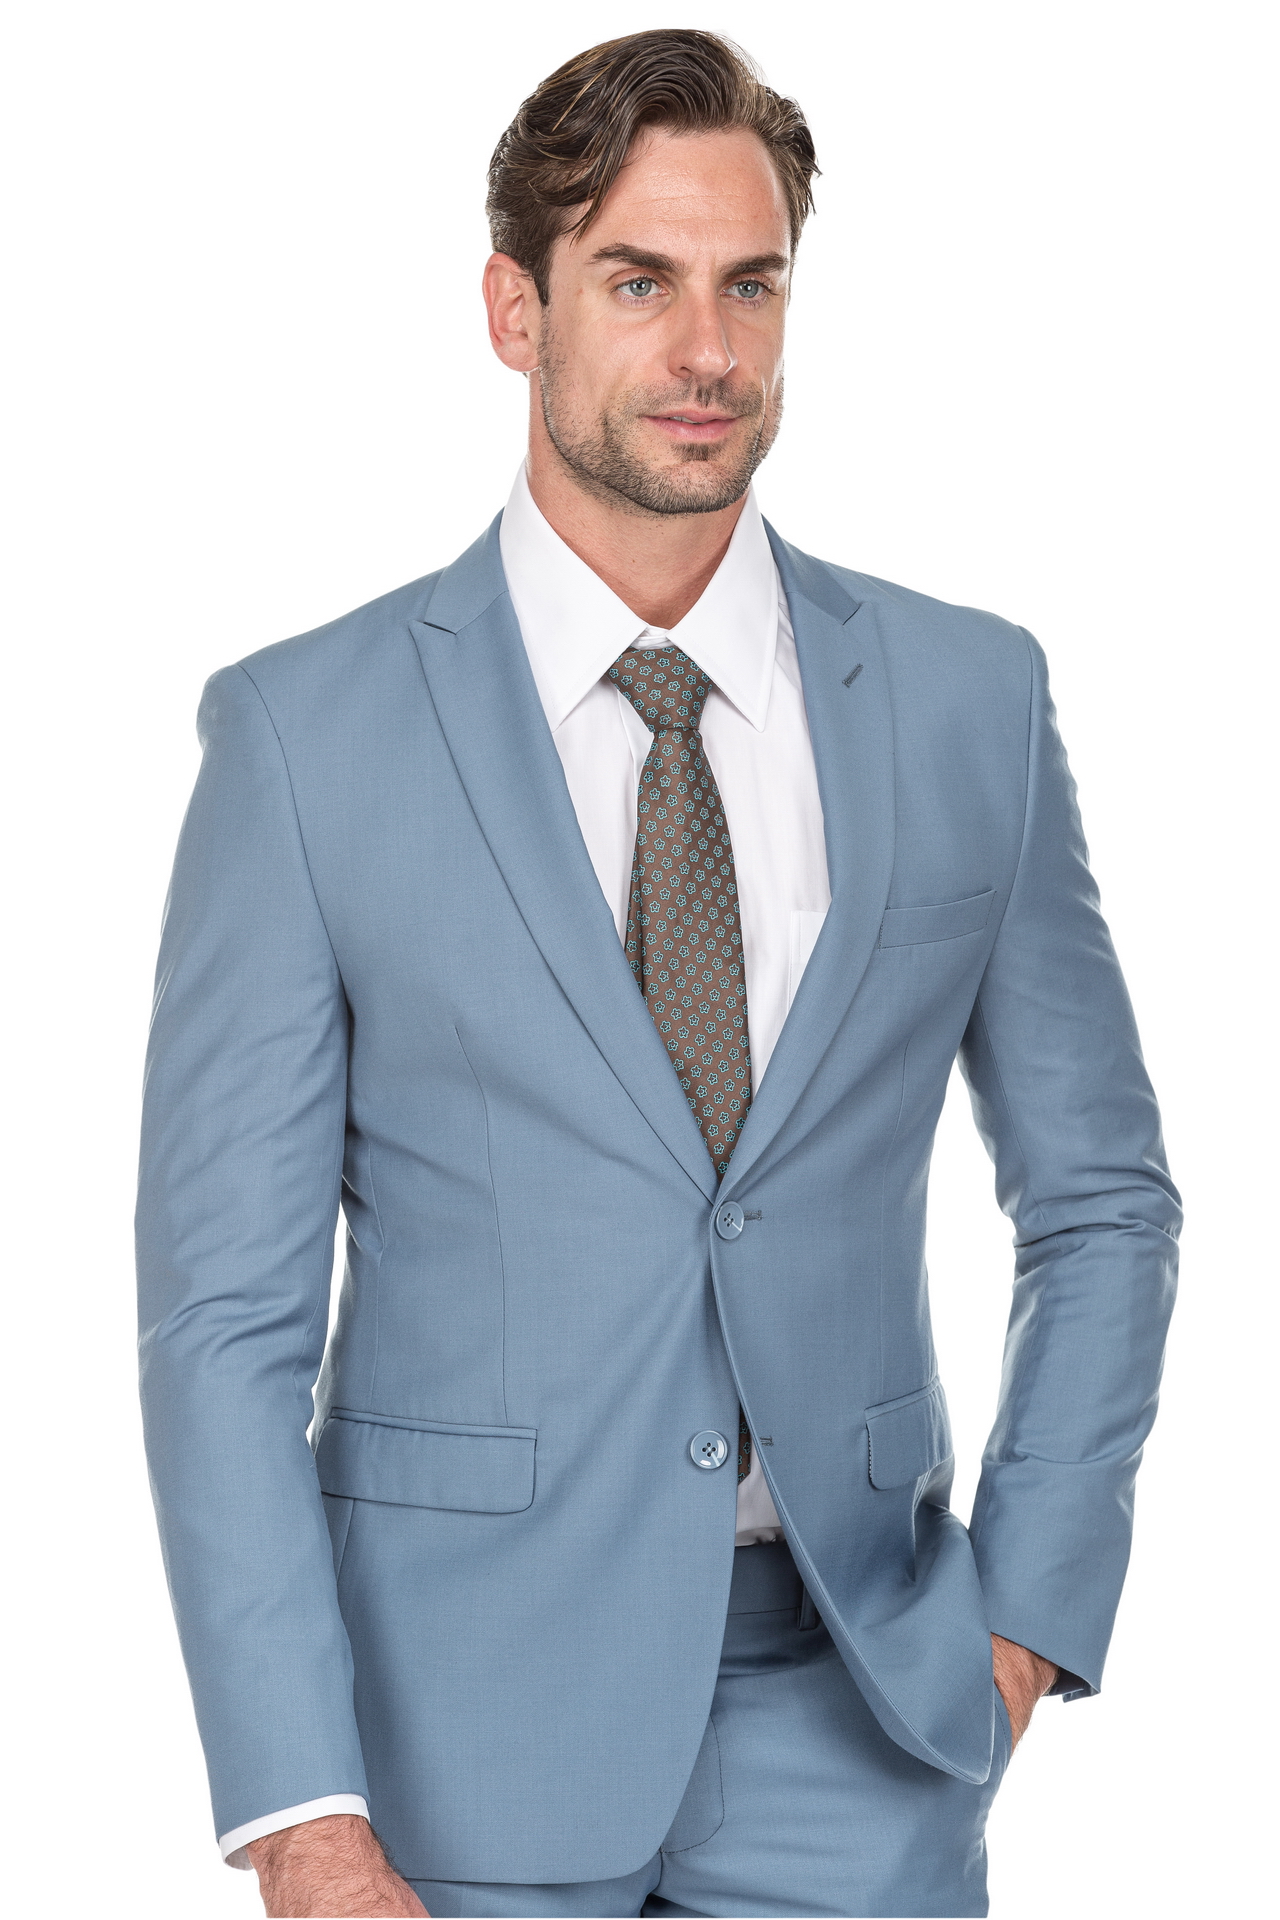 Mens Suit Jackets Size 46 | Shop Online at Moss Bros.